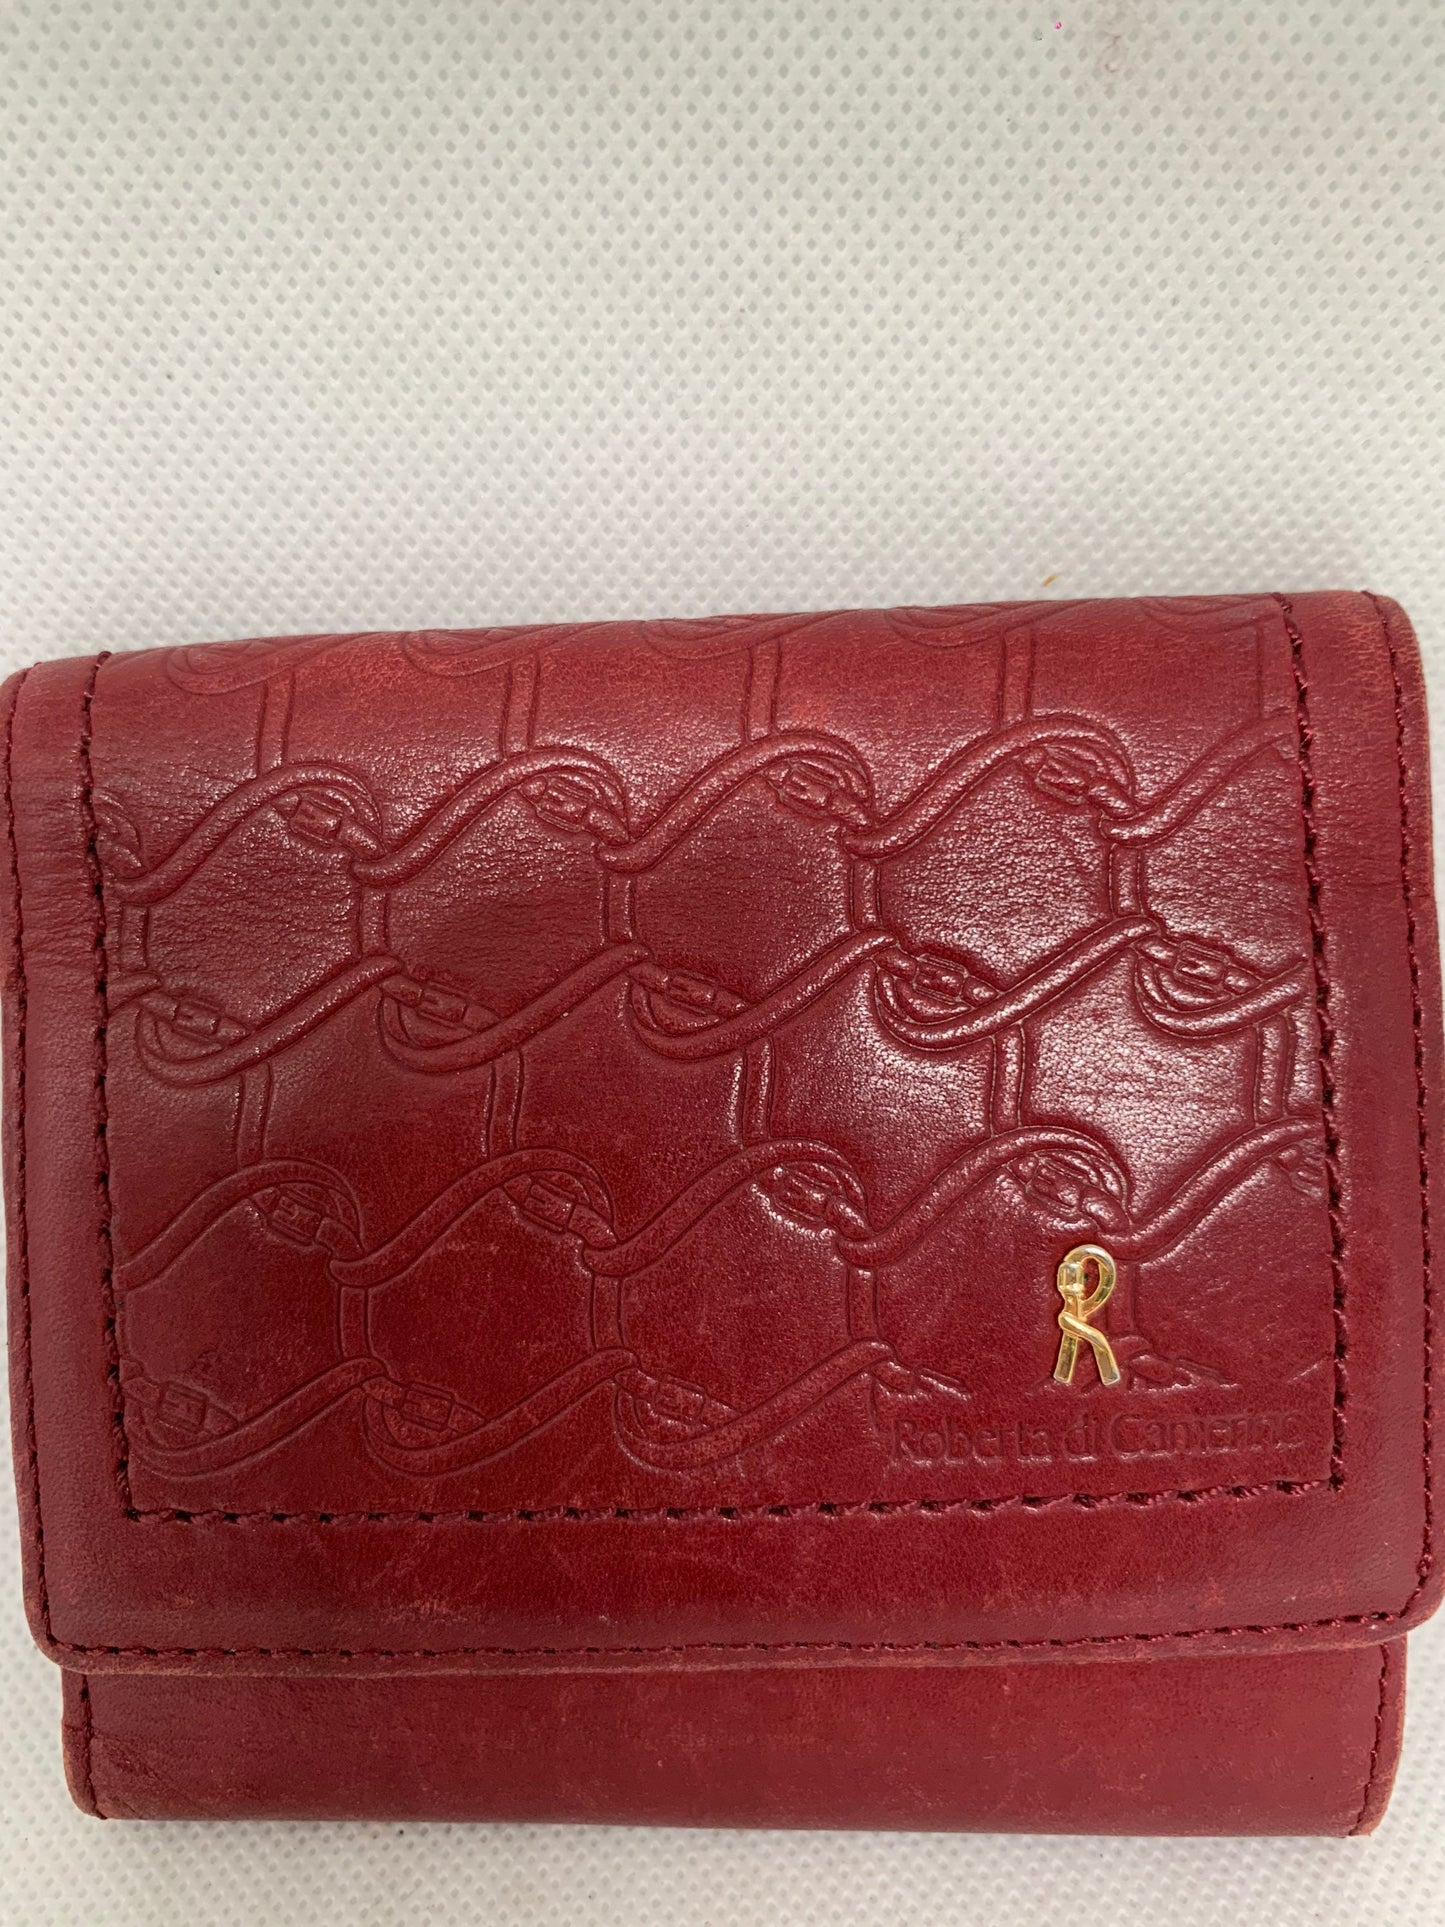 Roberta Di Cameron  red wallet 10w x 10H x 21cm ( BBW 71 May 2022)